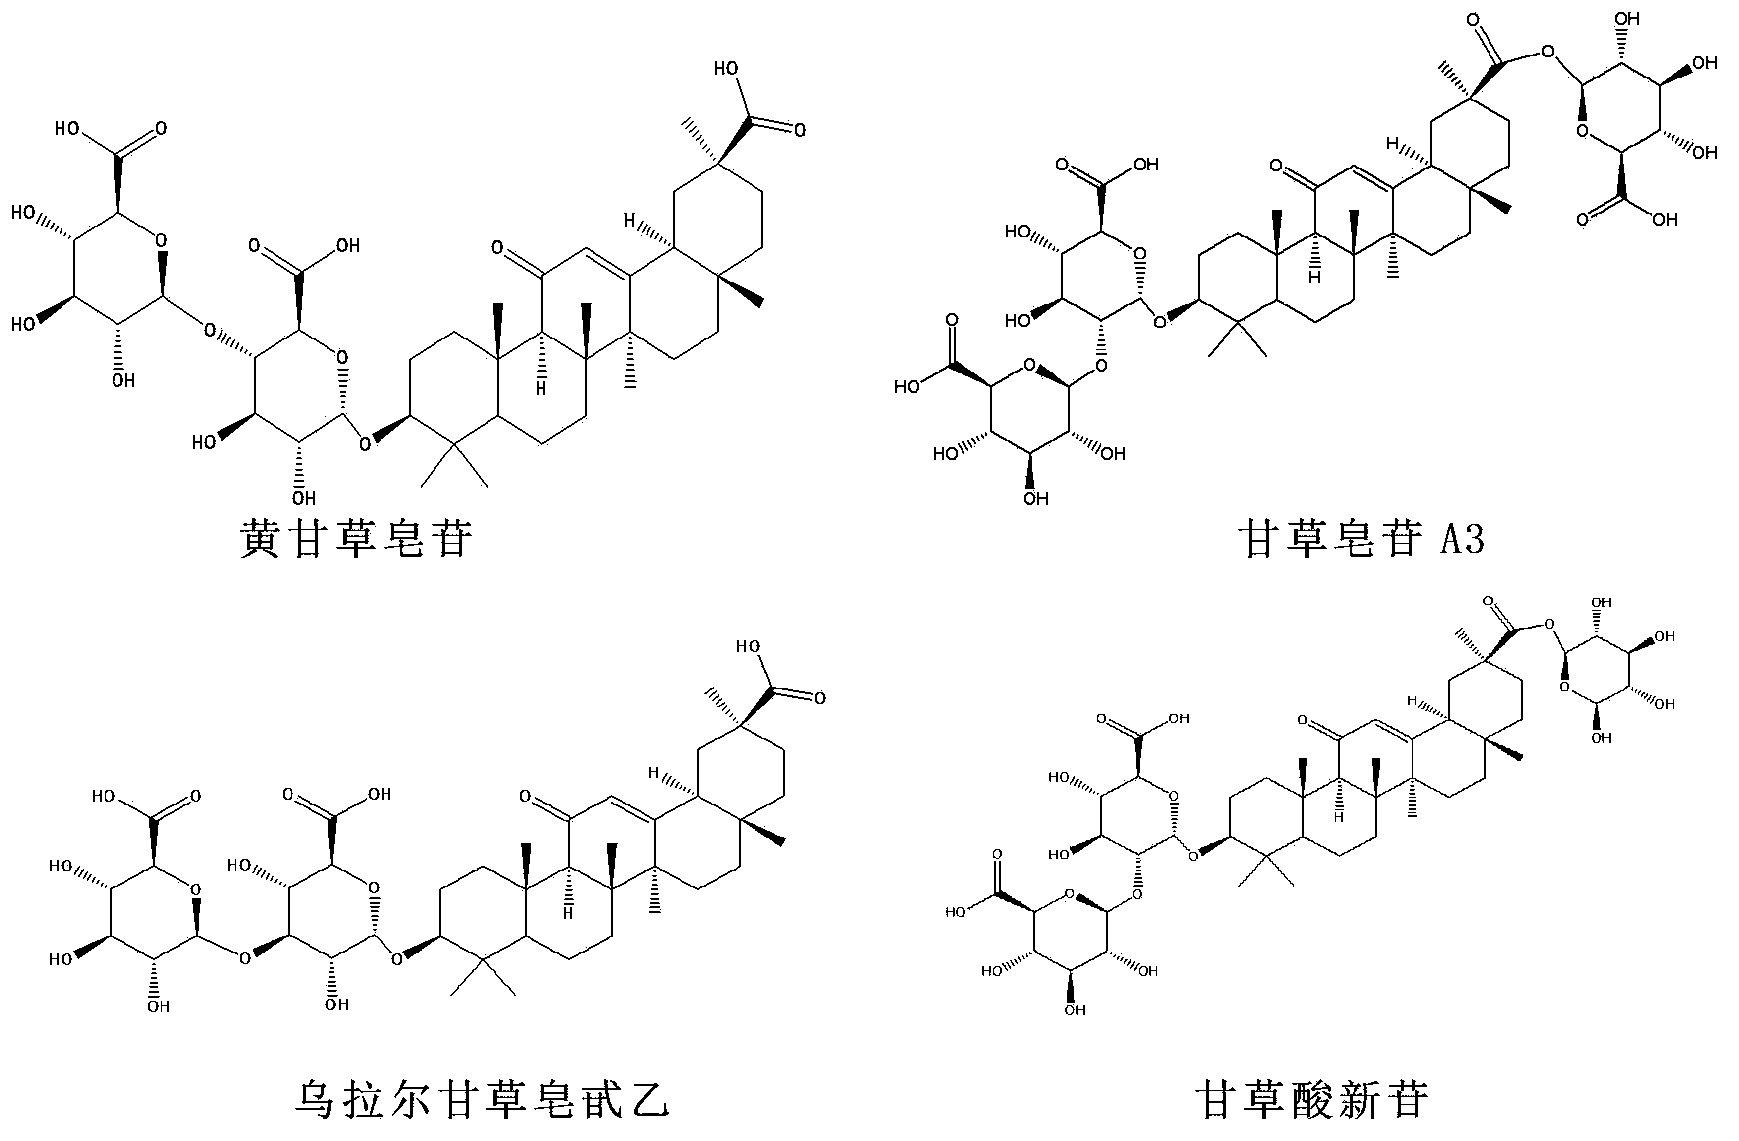 Method for preparing glycyrrhetinic acid monoglucuronide